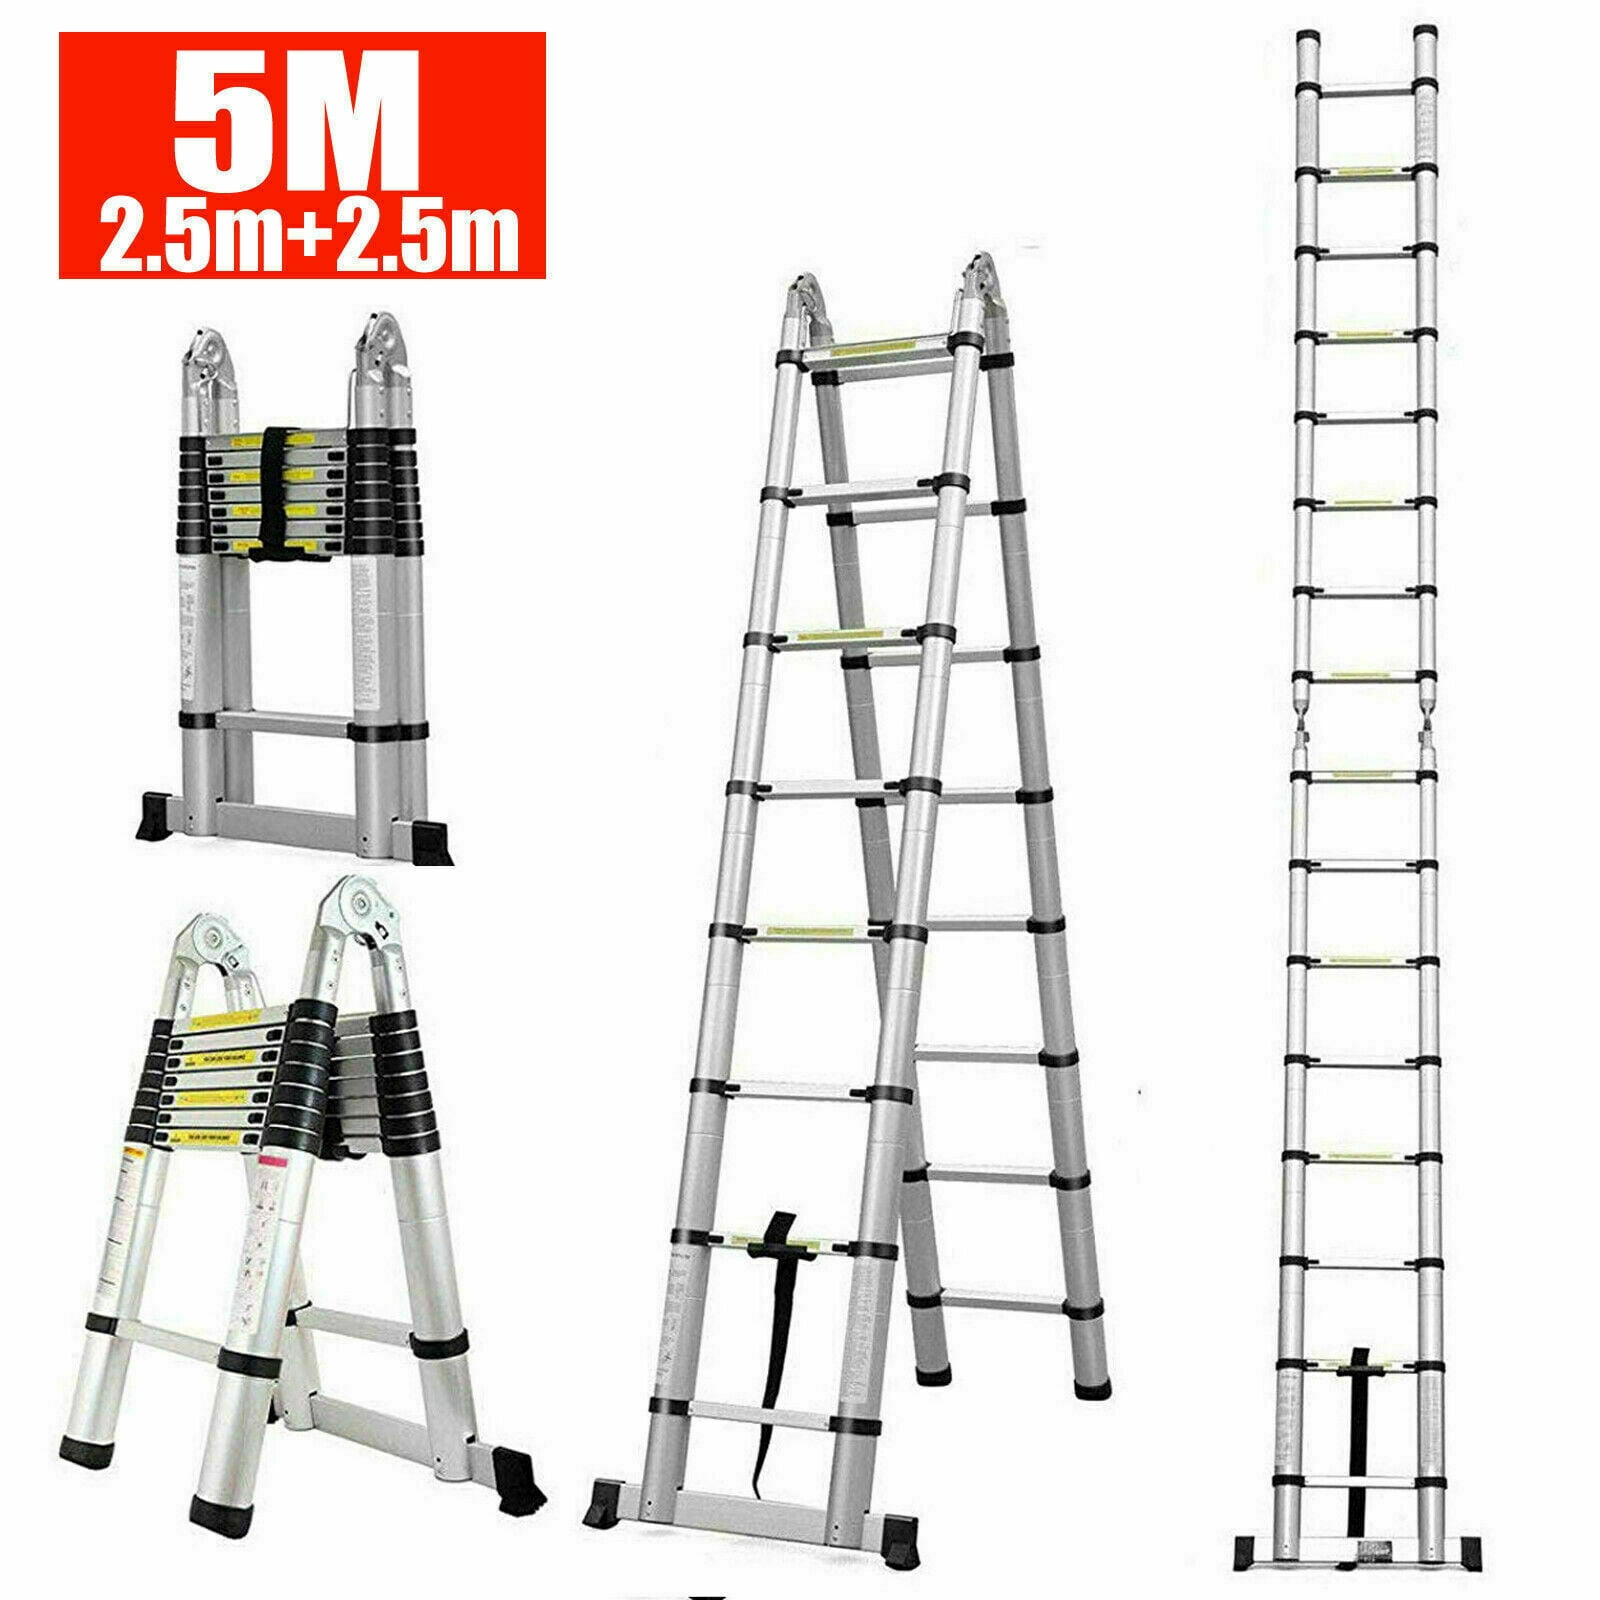 iets knal meubilair 5M/16.4ft Multi Purpose Folding Telescopic Ladder Aluminum Extension Ladders  Length (2.5M+2.5M) - Walmart.com